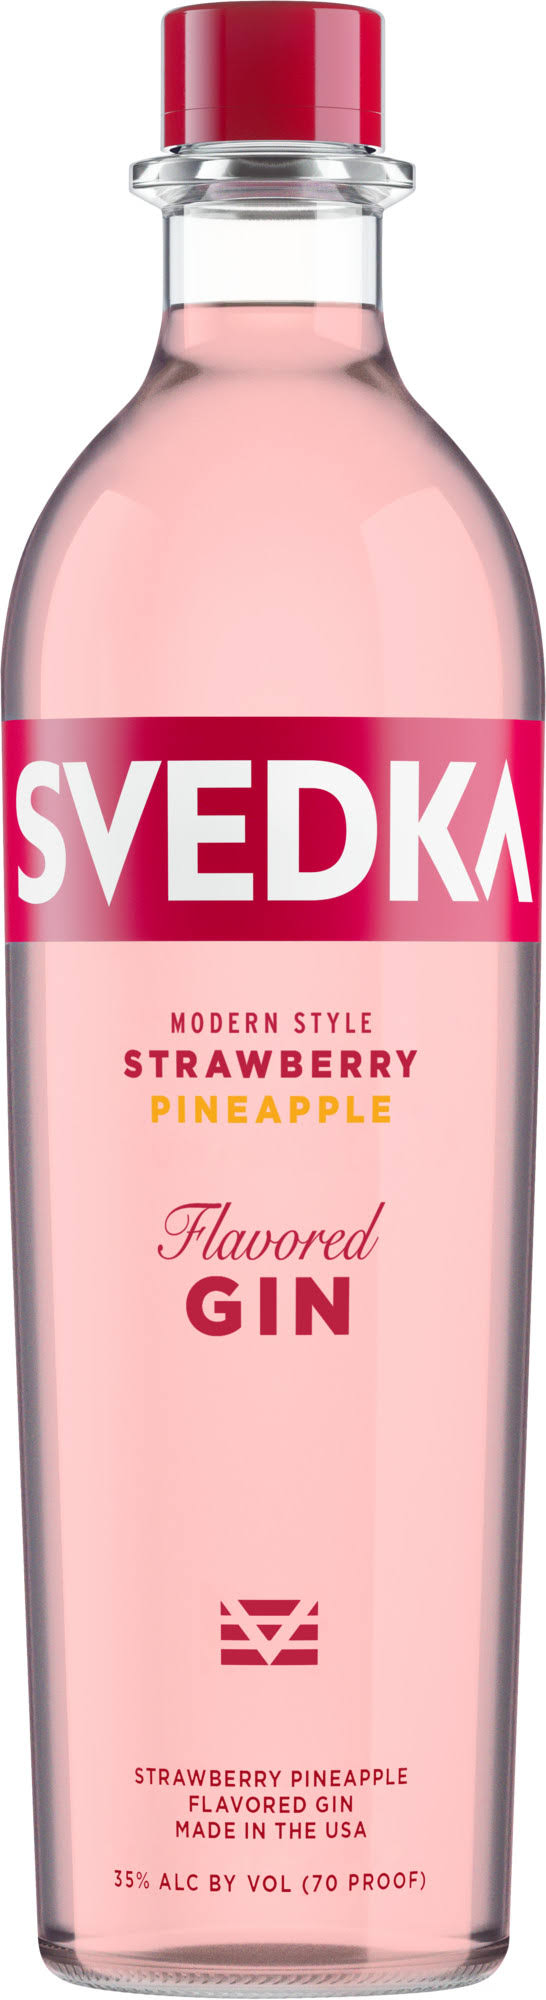 SVEDKA - Strawberry Pineapple Gin (750ml)